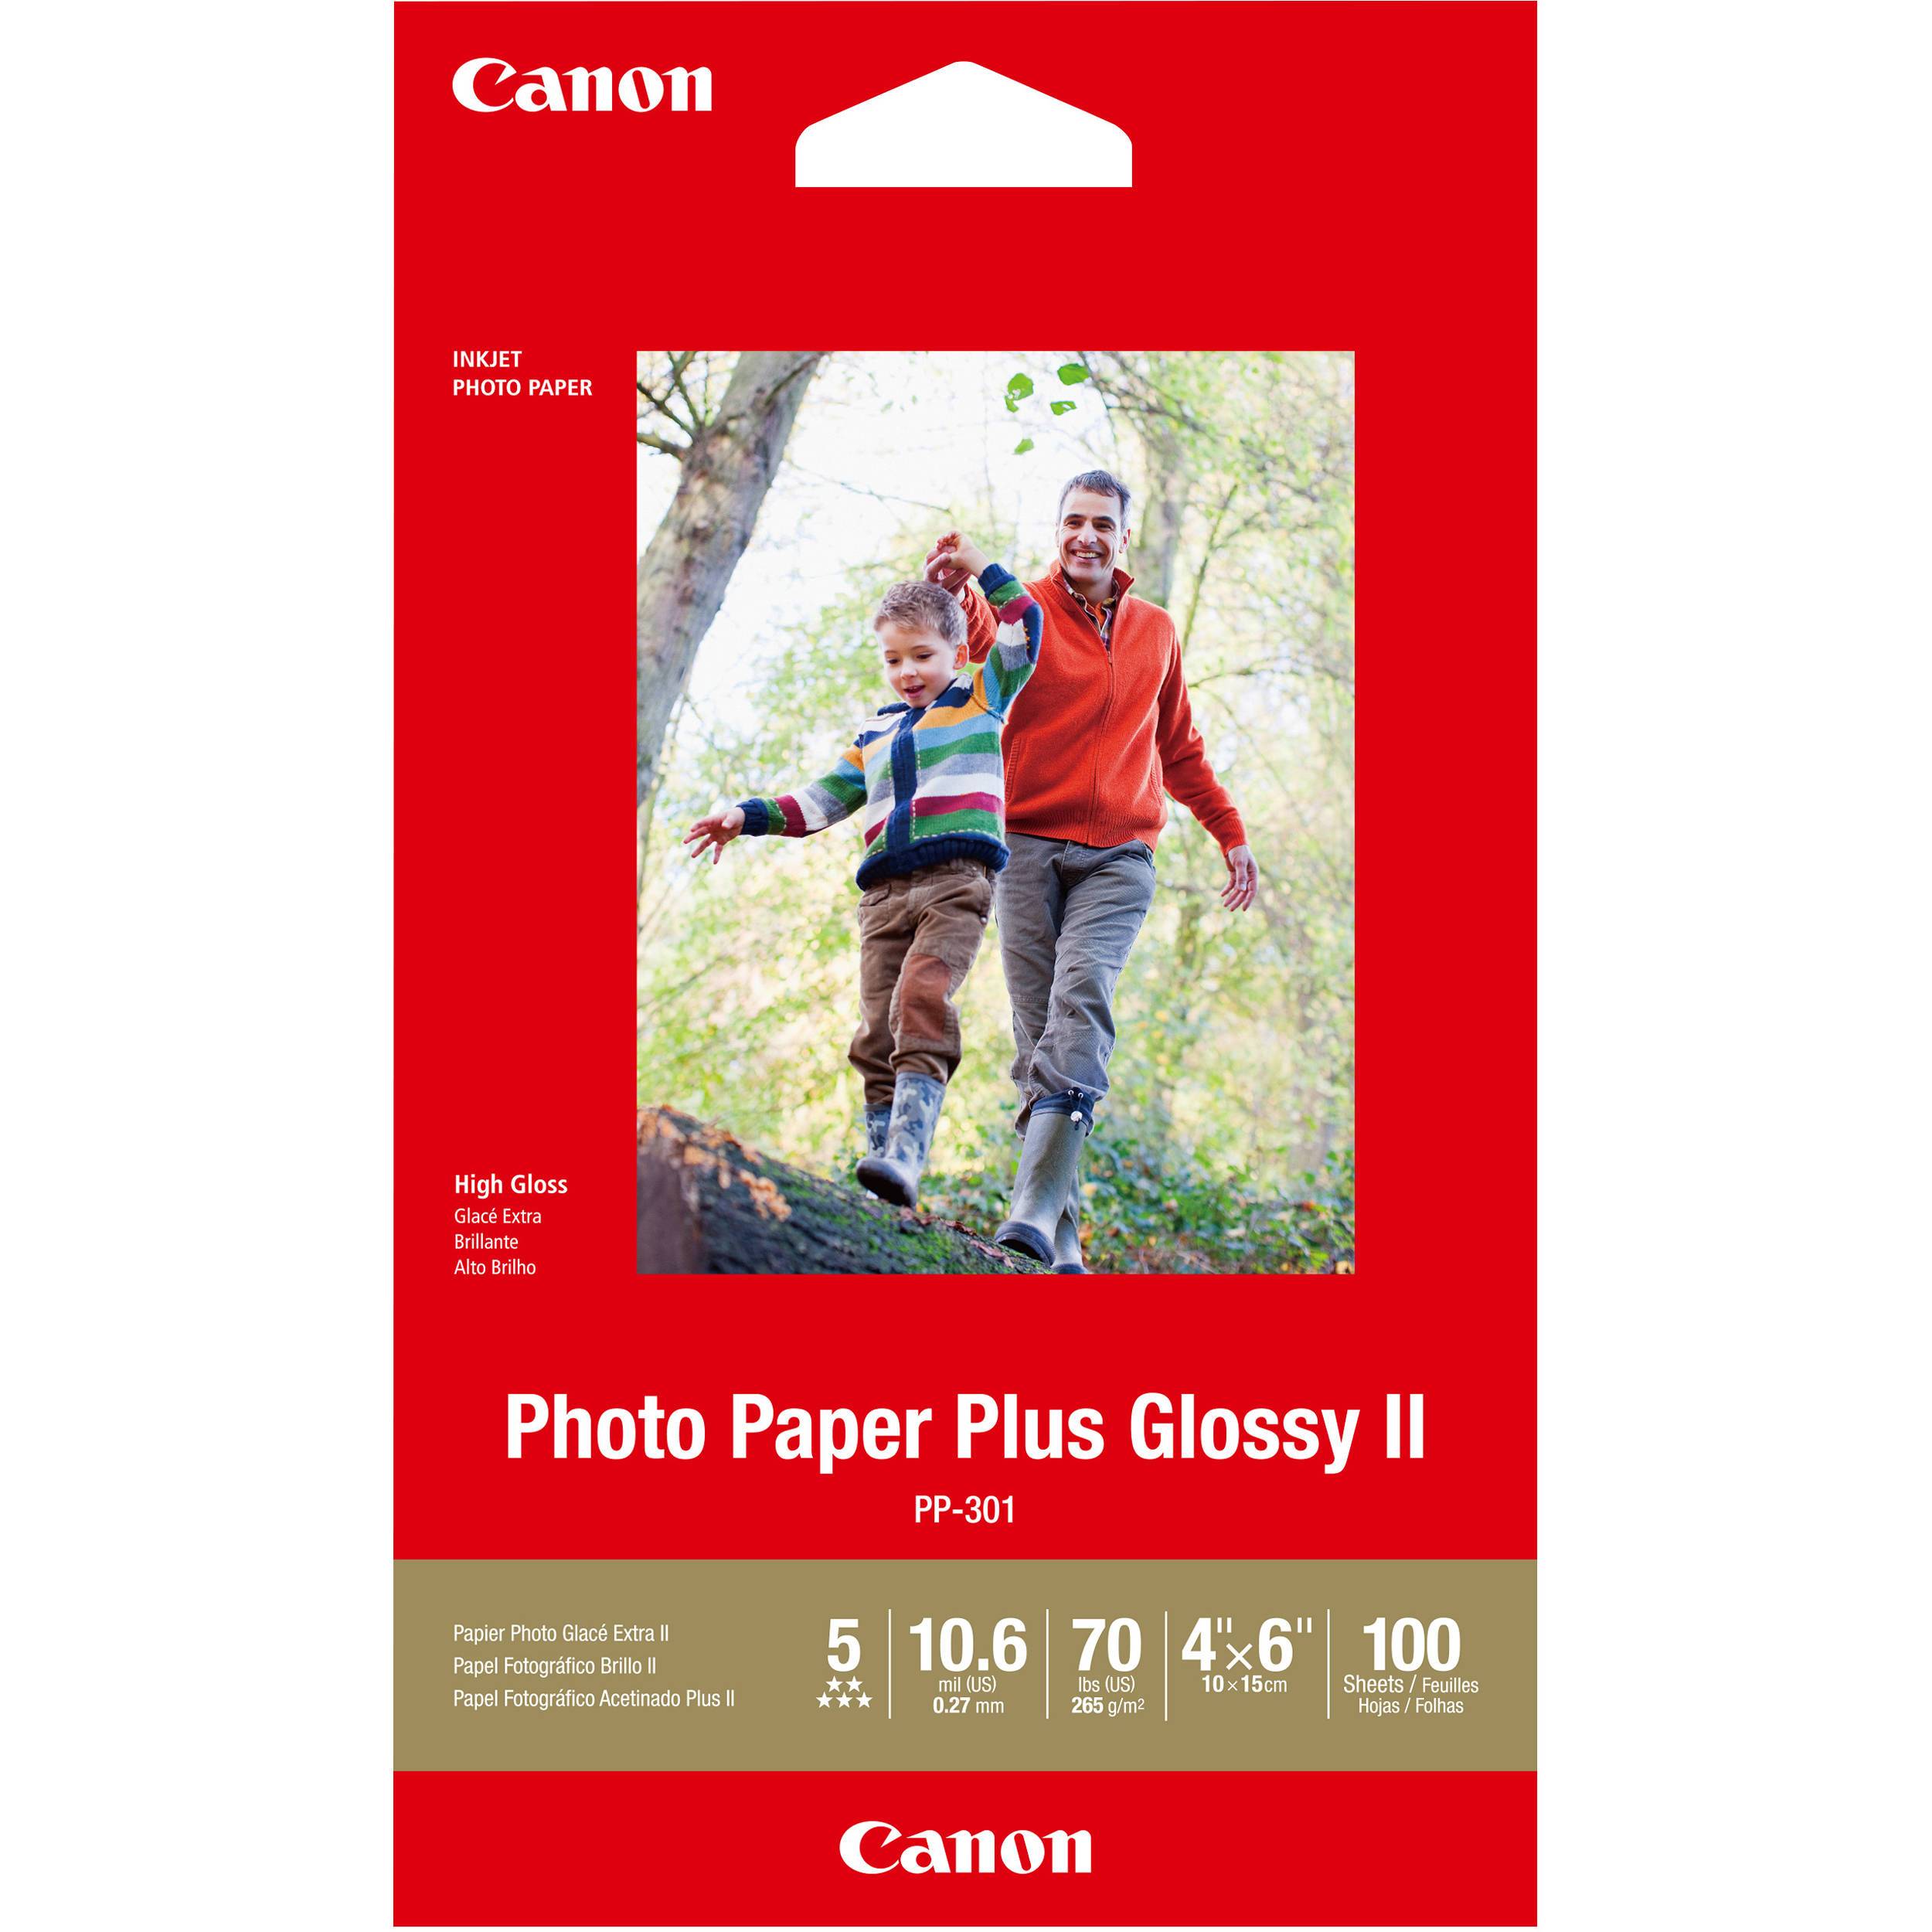 Canon Photo Papier Plus Glossy II, 10x15